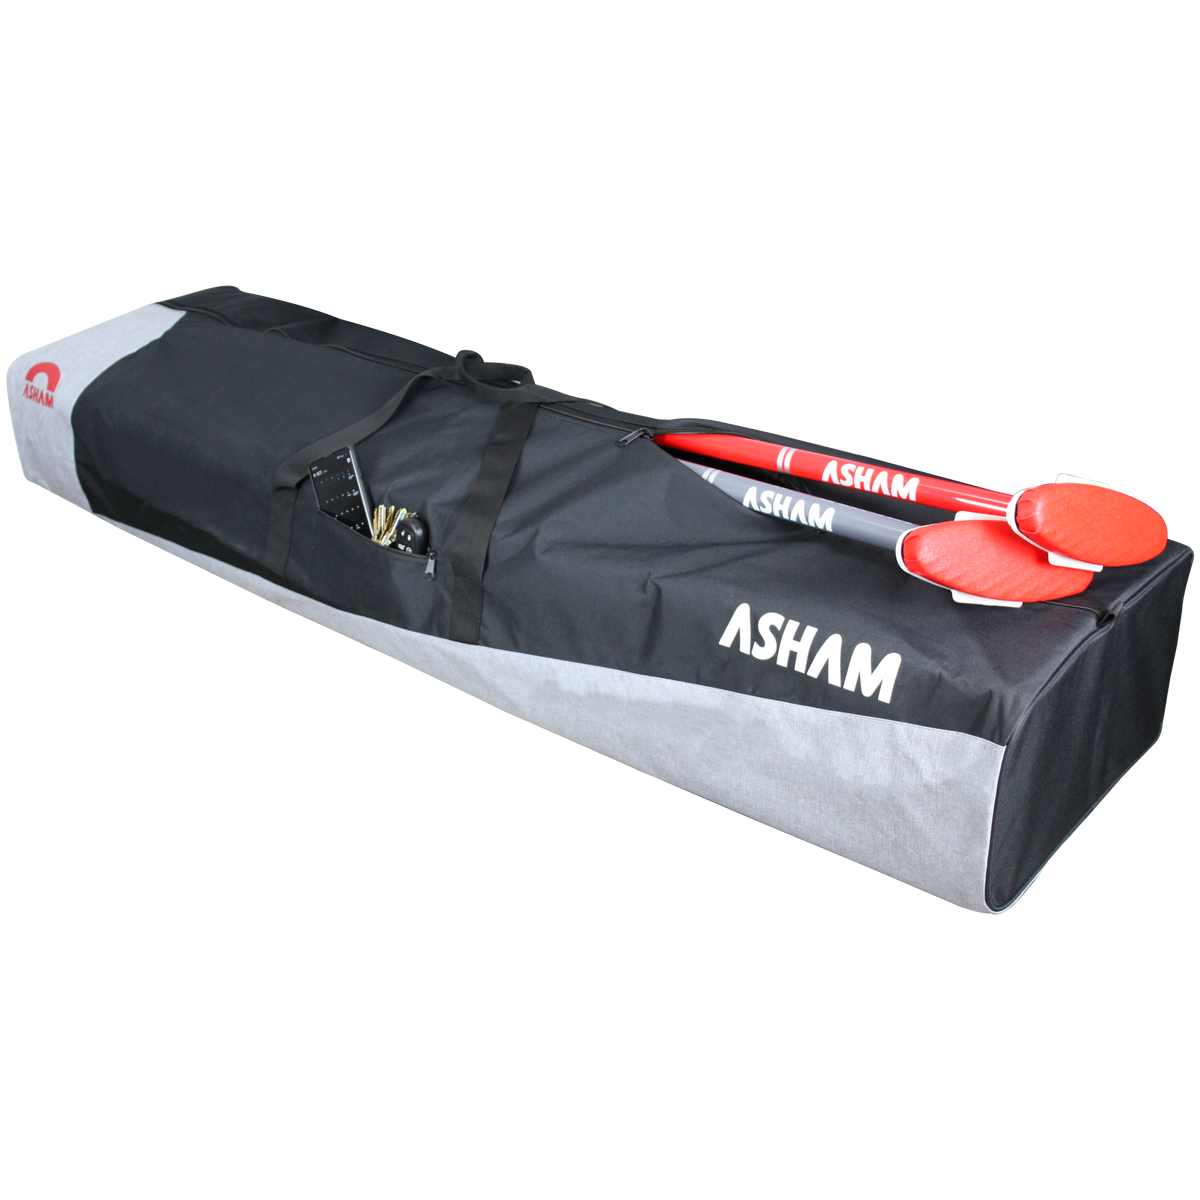 XXL Curling Broom Bag | Curling Broom Bag | Asham Curling Supplies ...